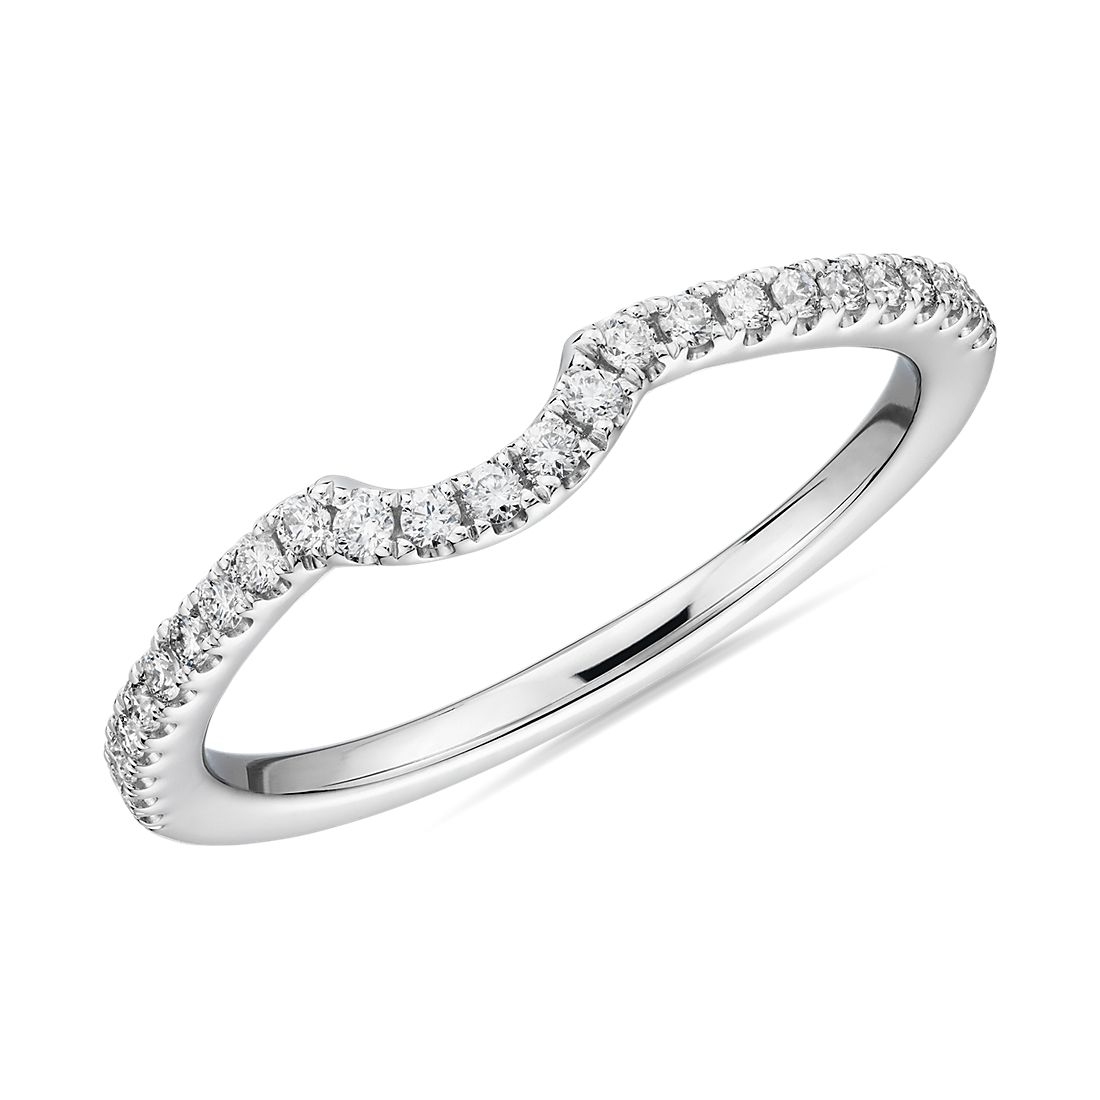 Curved Pavé Diamond Wedding Ring in Platinum (0.15 ct. tw.)